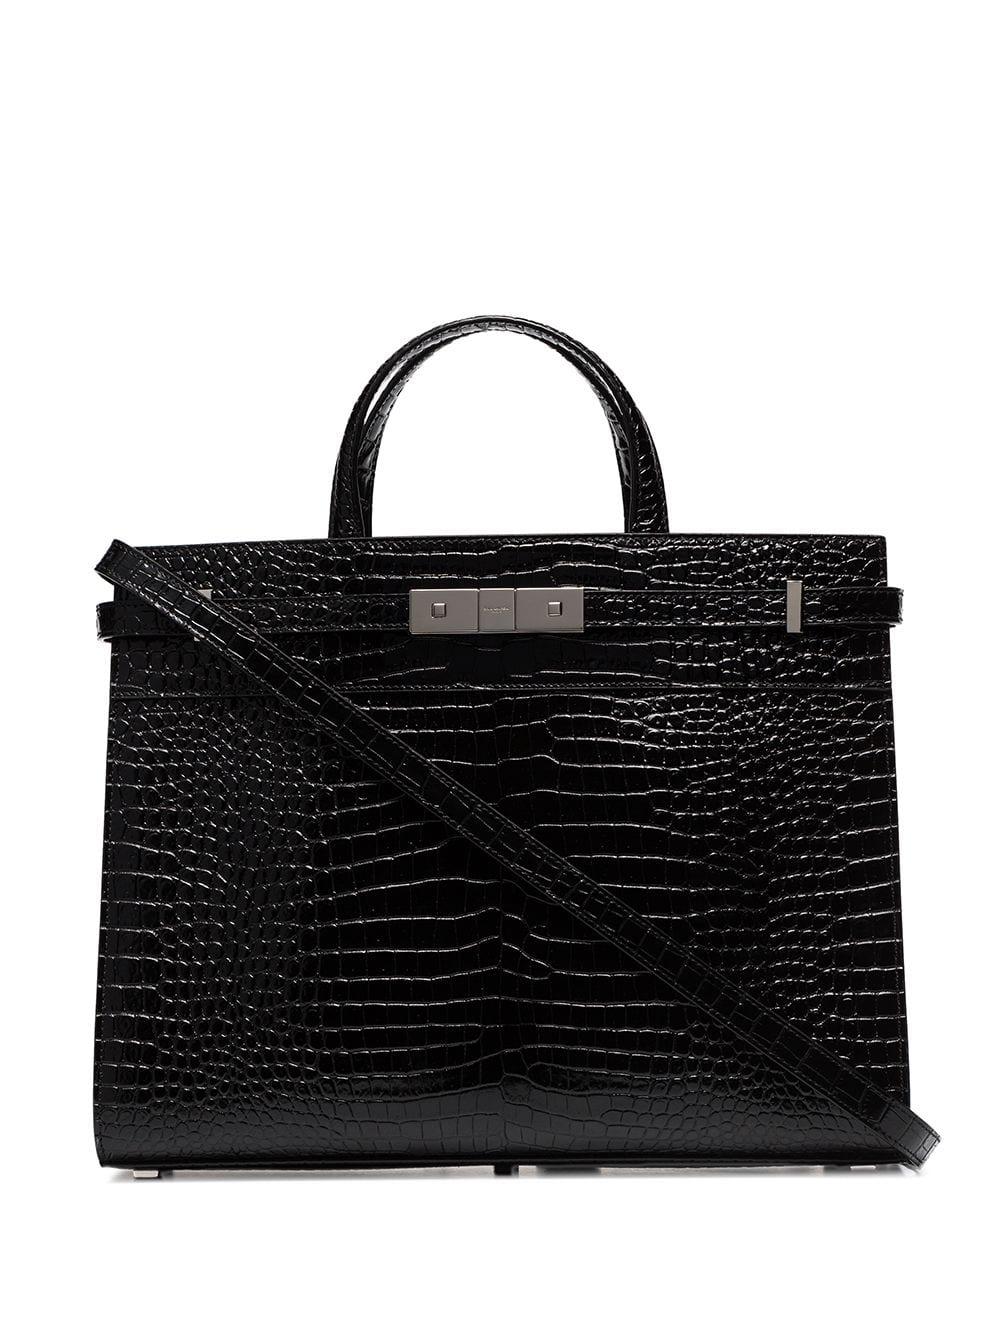 Download Saint Laurent Black Manhattan Mock Croc Leather Tote Bag in Black - Lyst